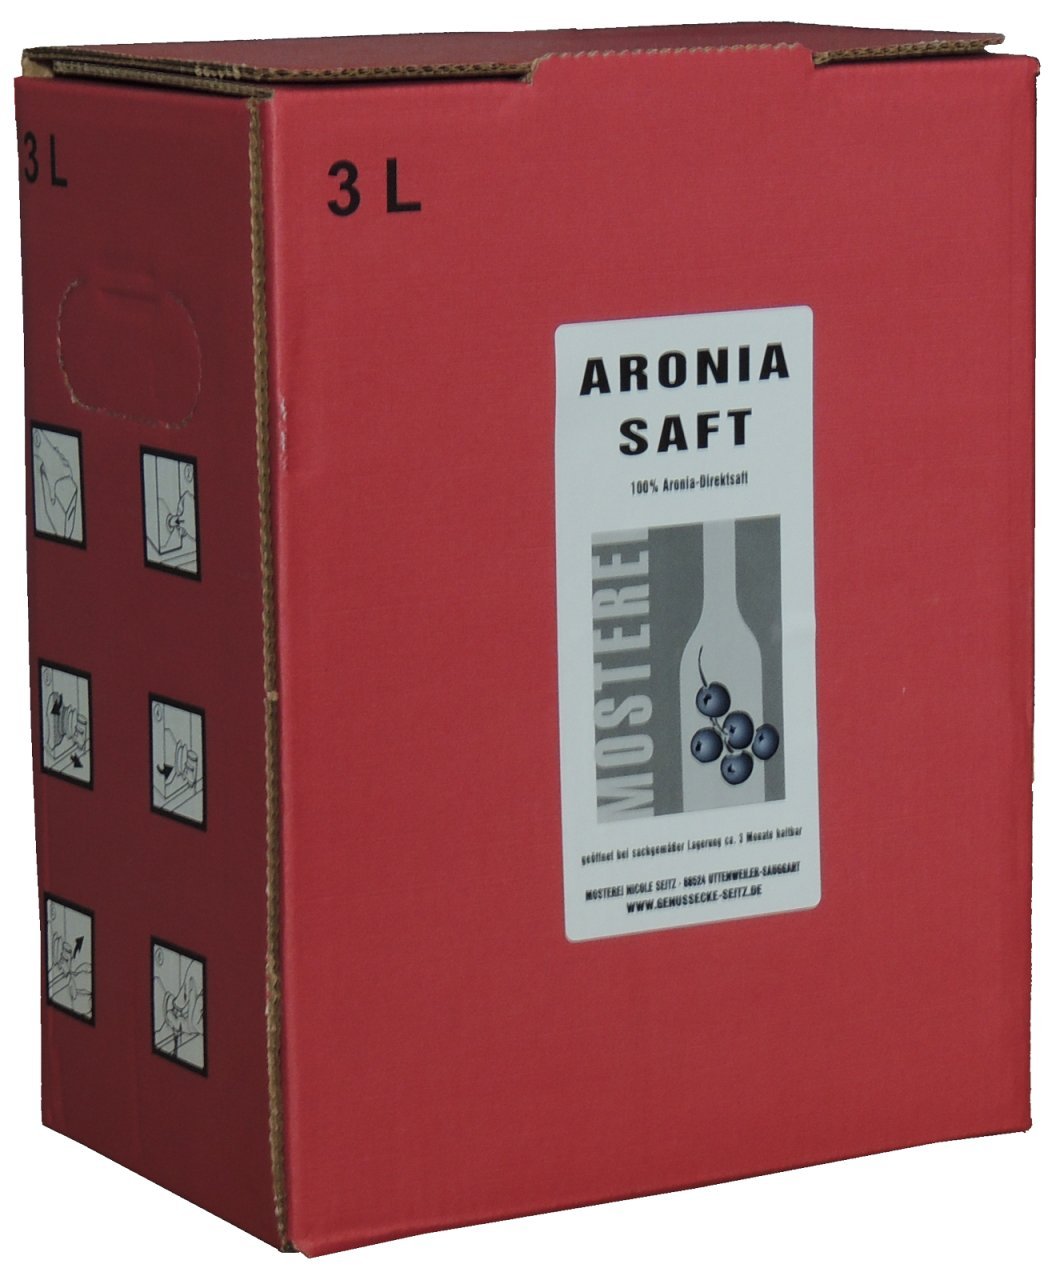 Aronia-Saft Direktsaft 4x 3L Bag in Box